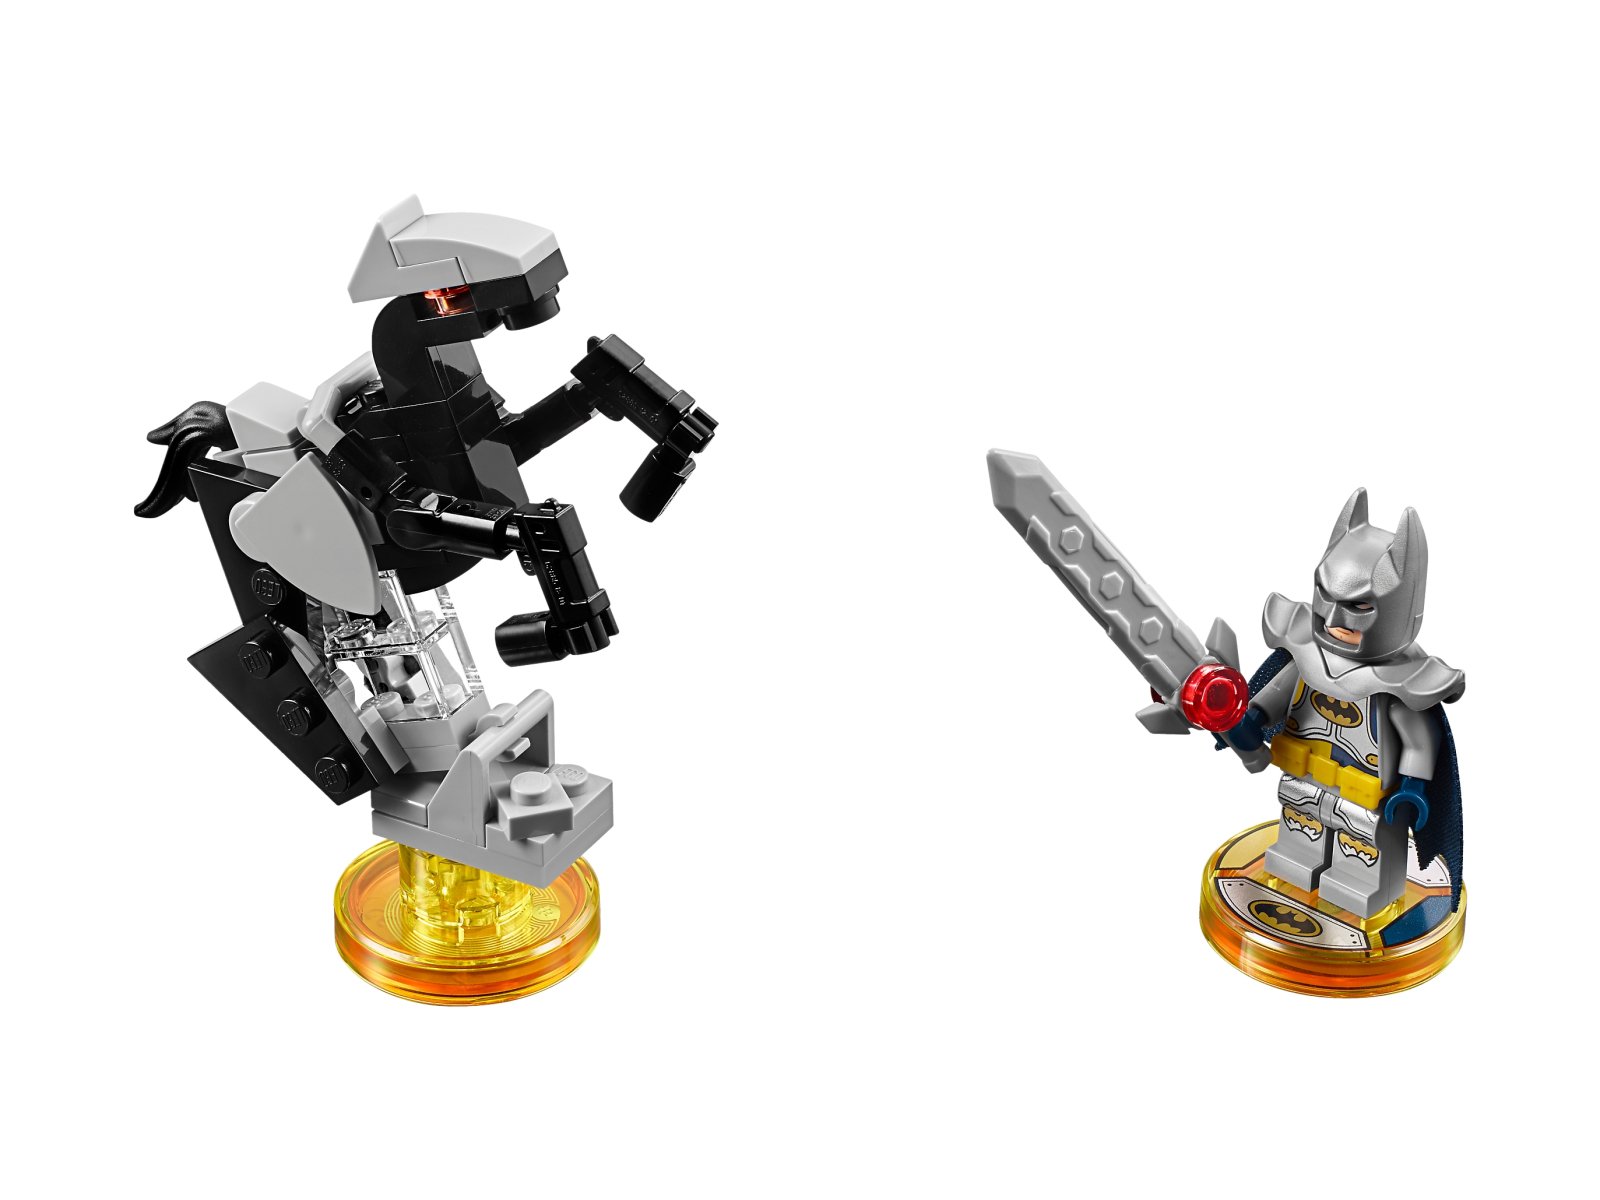 LEGO 71344 Dimensions Excalibur Batman™ Fun Pack